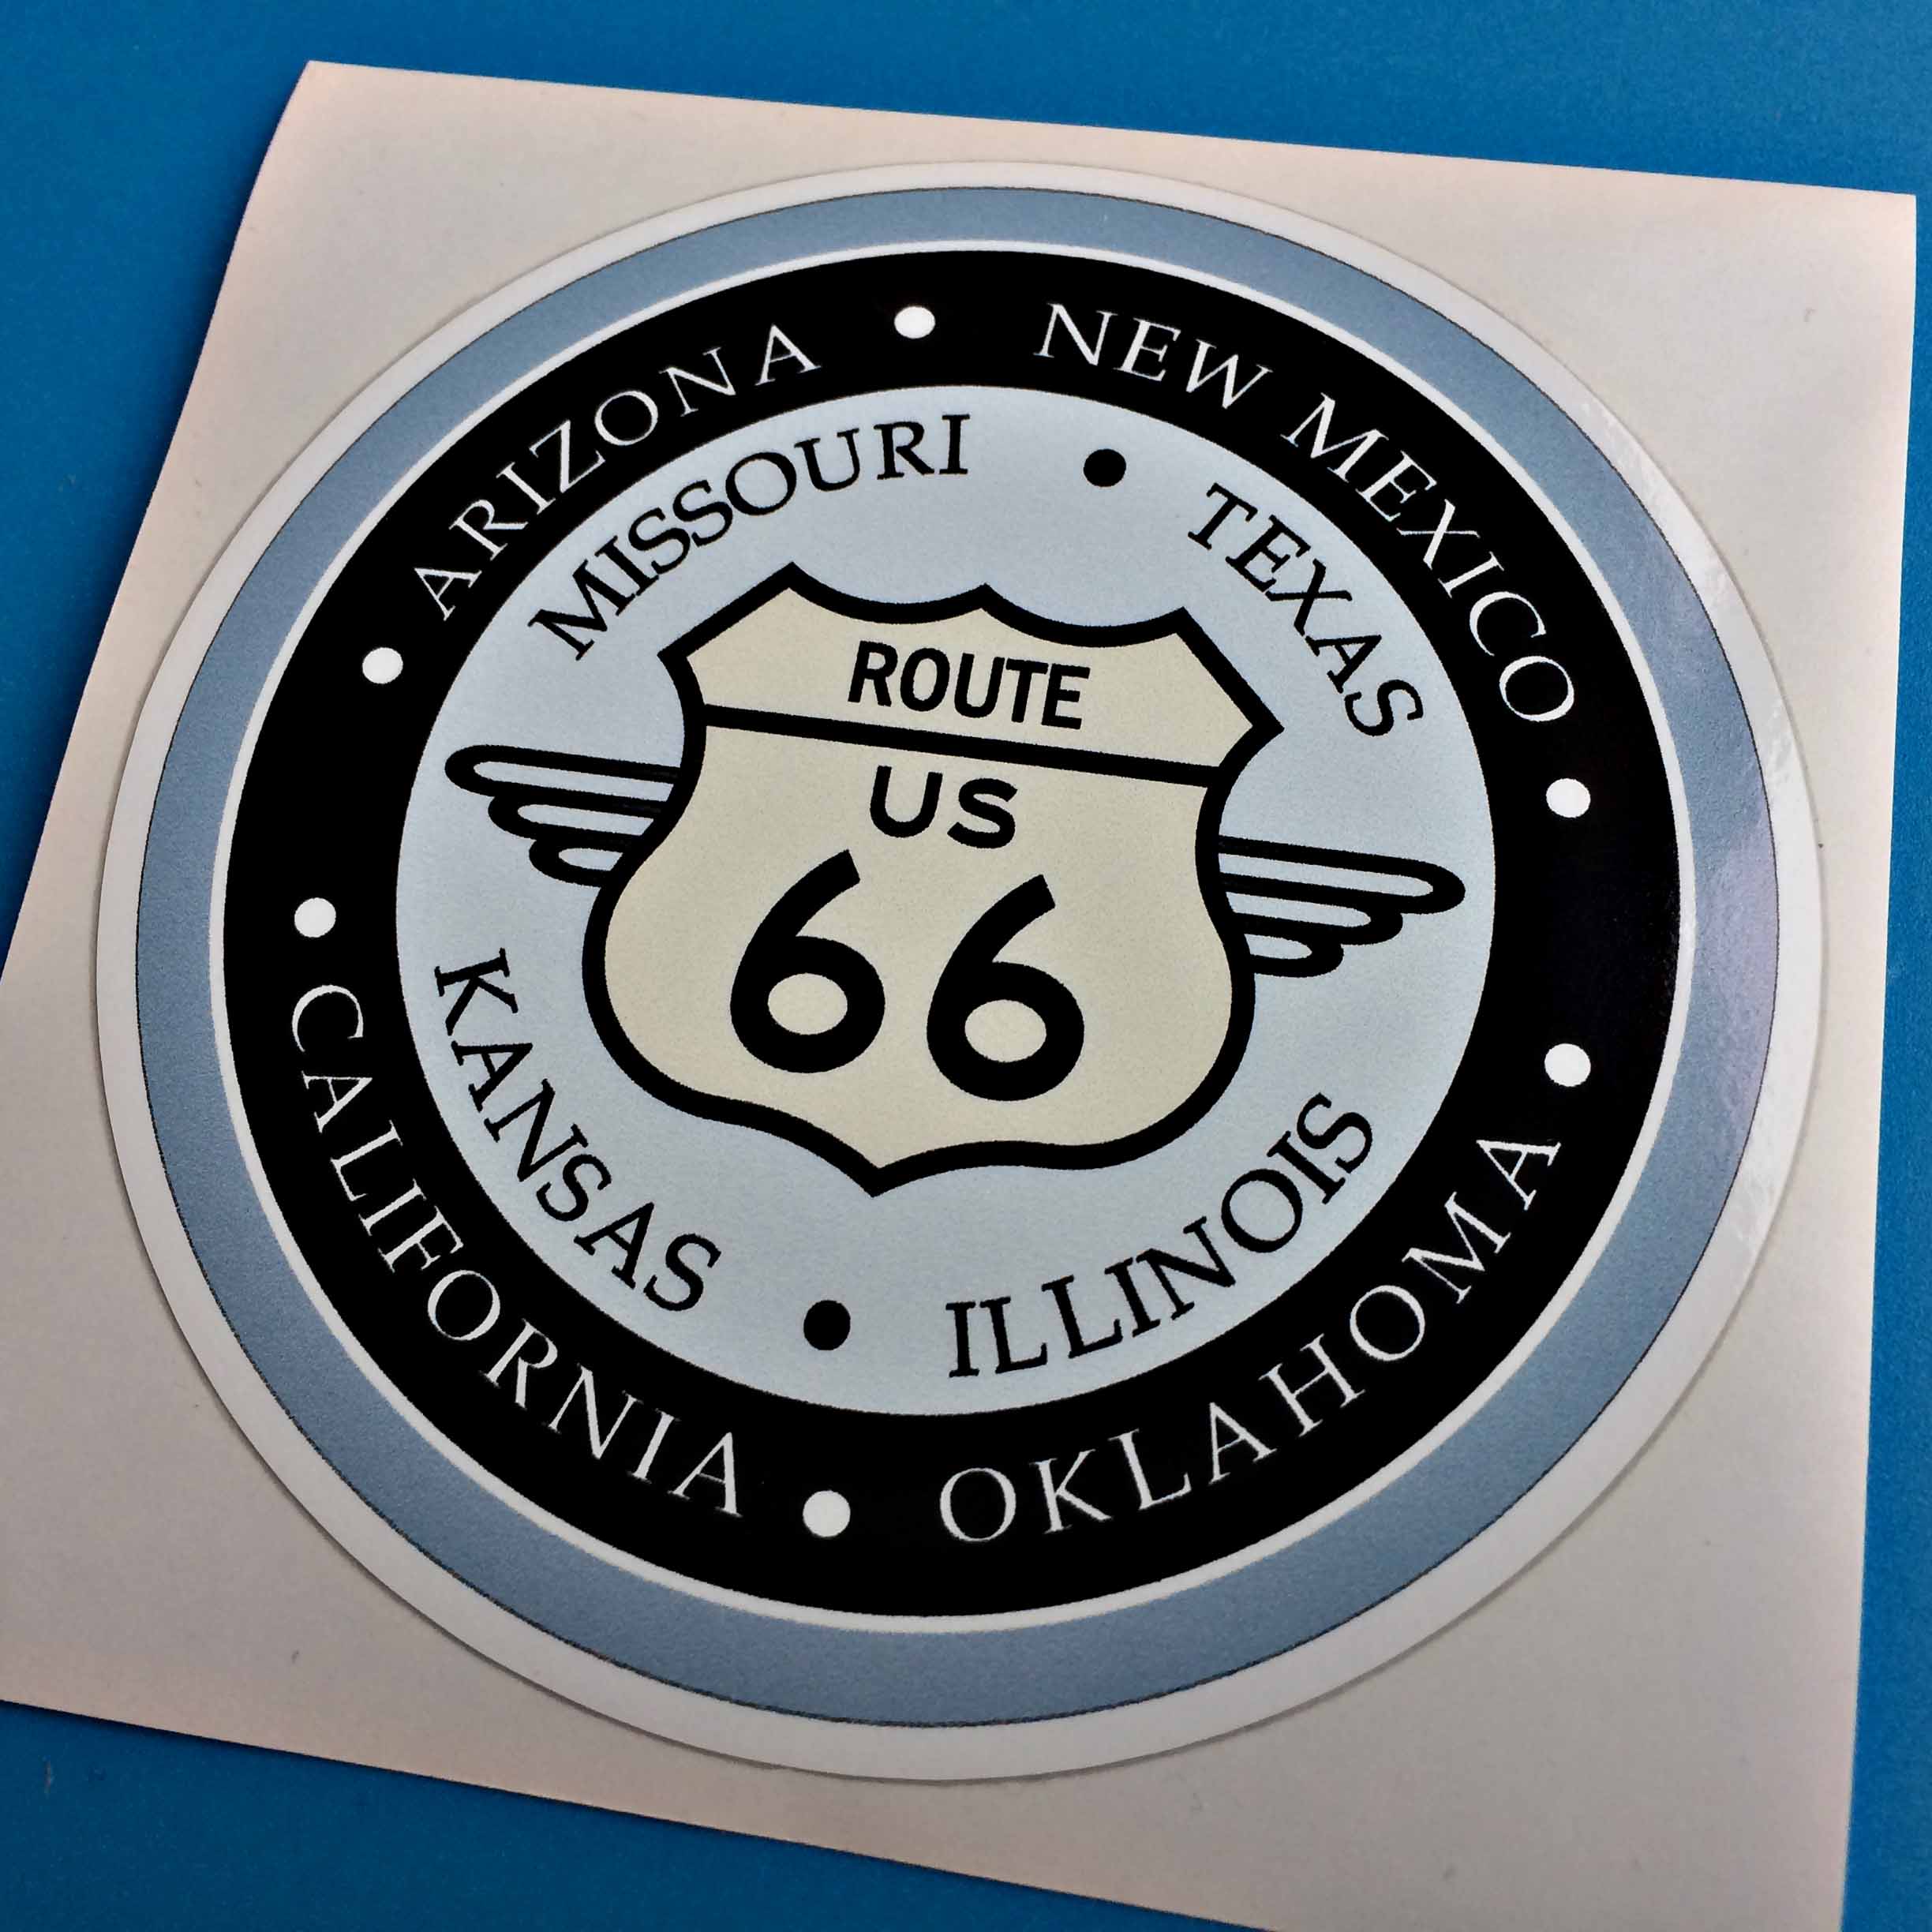 Route US 66 sign, Arizona, New Mexico, Missouri, Texas, Kansas, Illinois, California, Oklahoma. Black and white lettering within three concentric circles of black and blue.